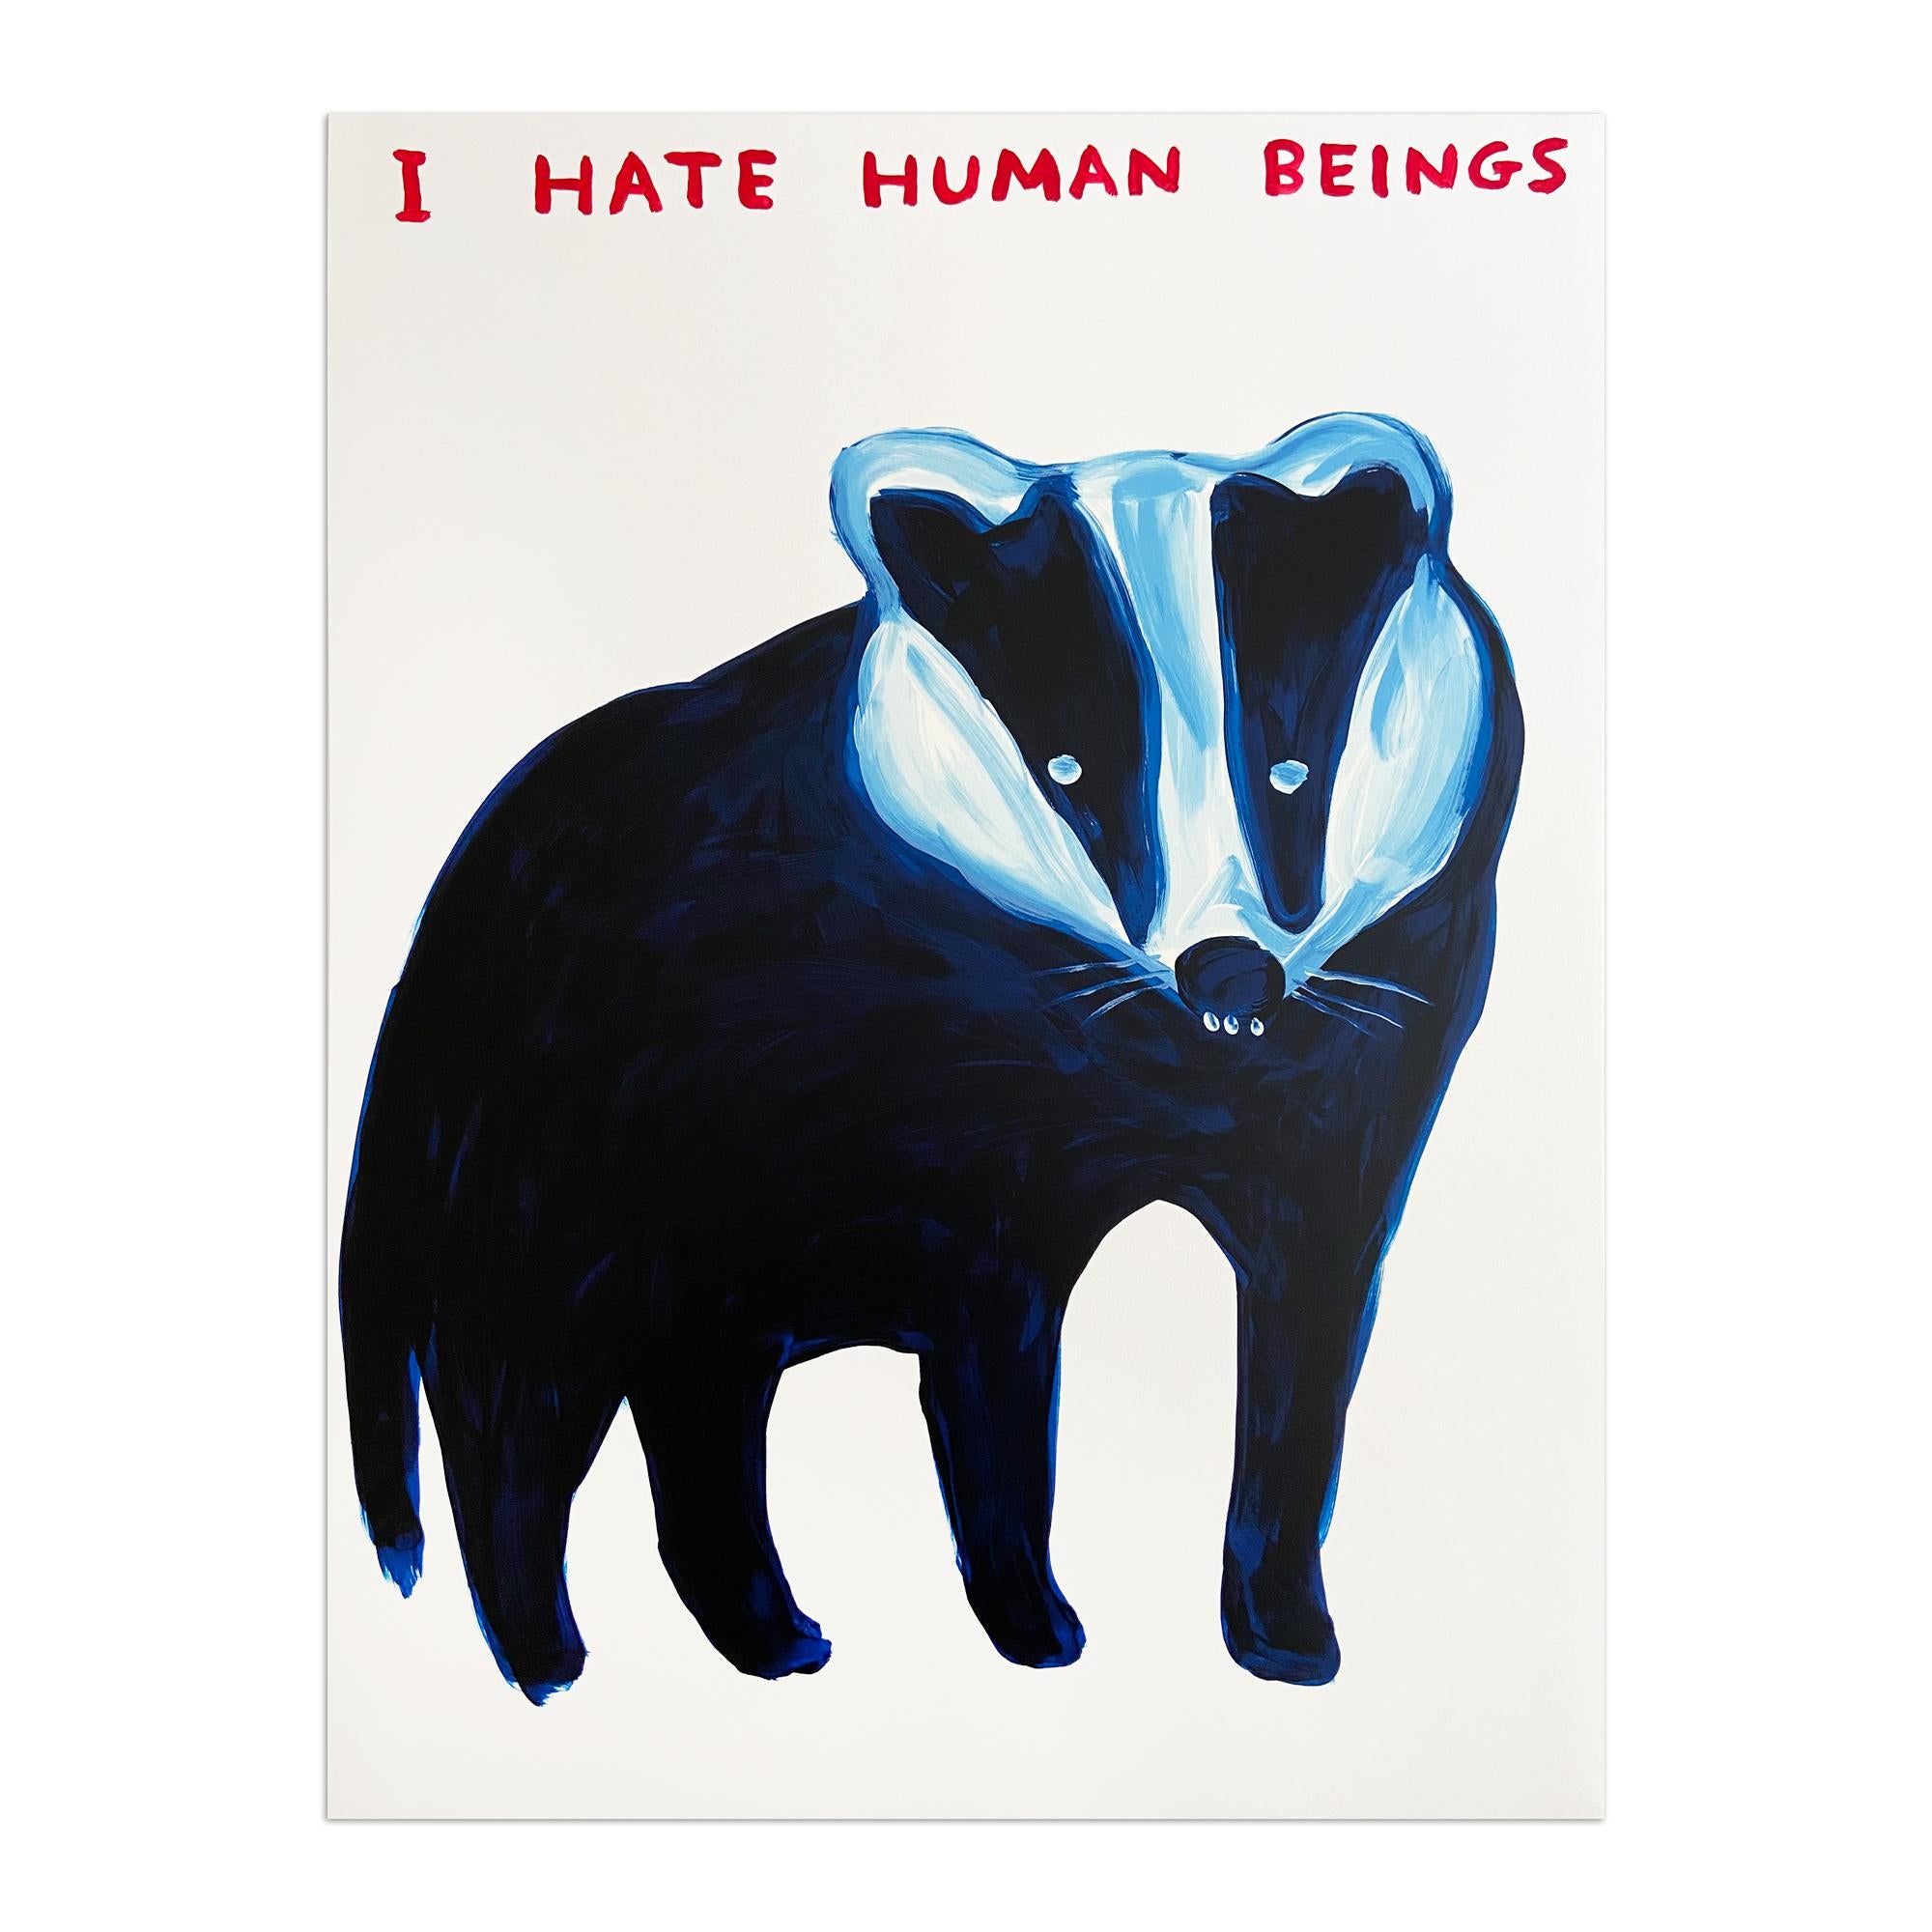 David Shrigley, I Hate Human Beings - Pop Art contemporain, estampe signée